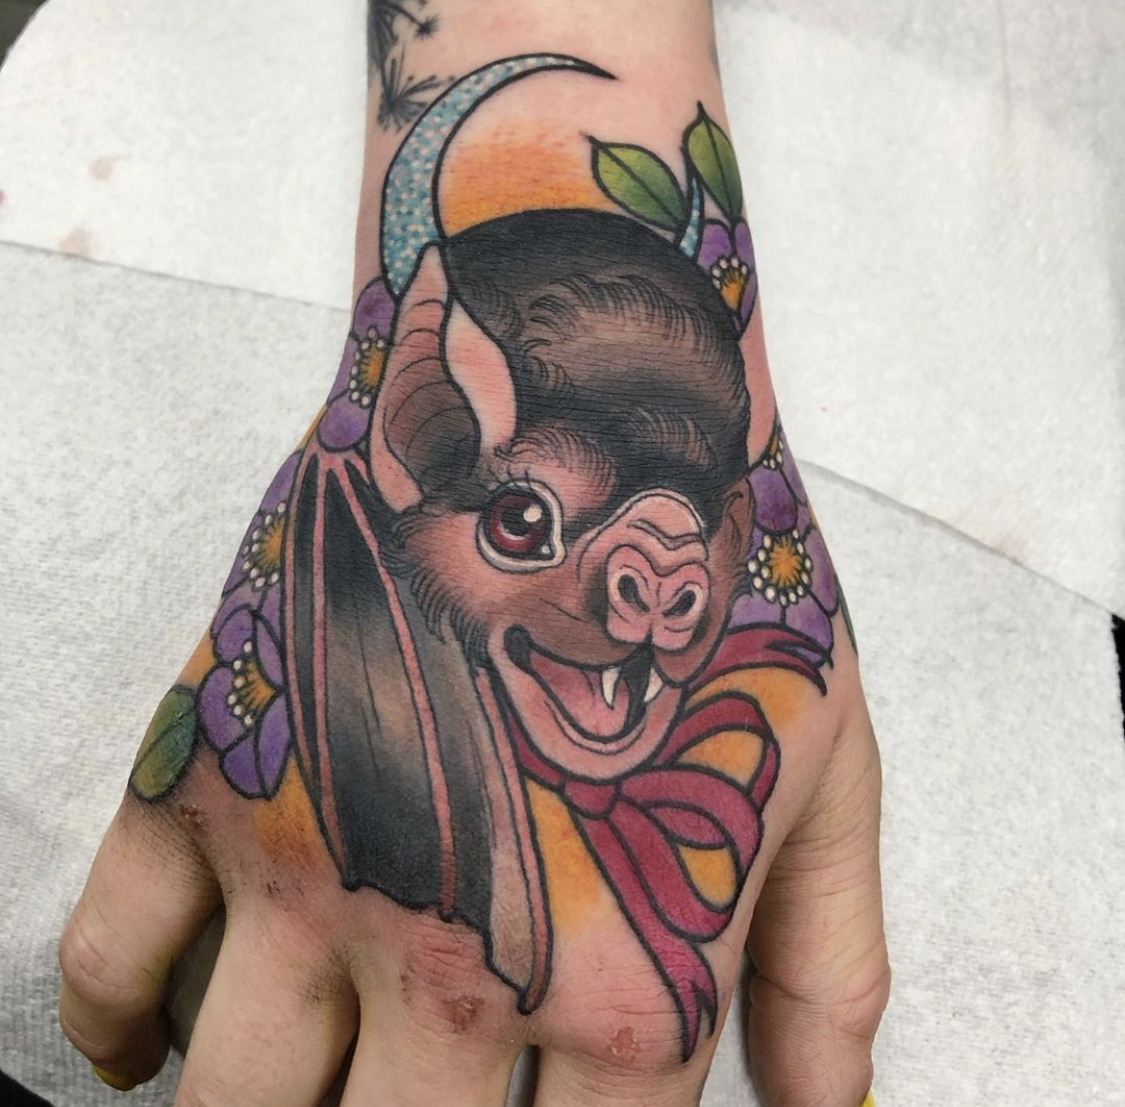 Tattoo of bat on hand